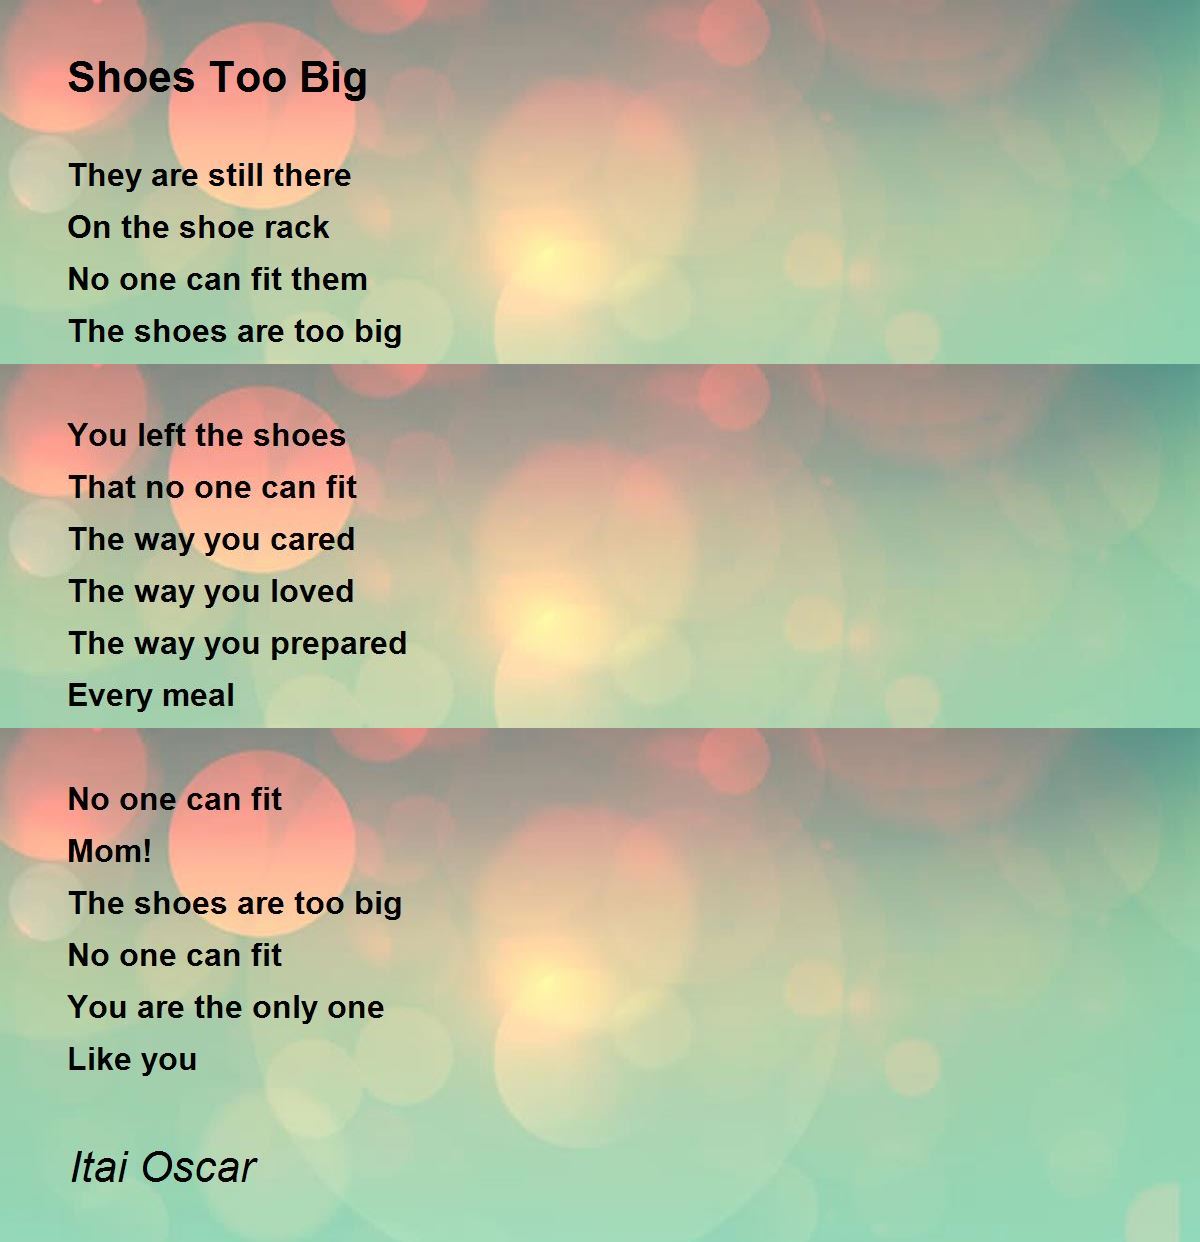 https://img.poemhunter.com/i/poem_images/435/shoes-too-big.jpg